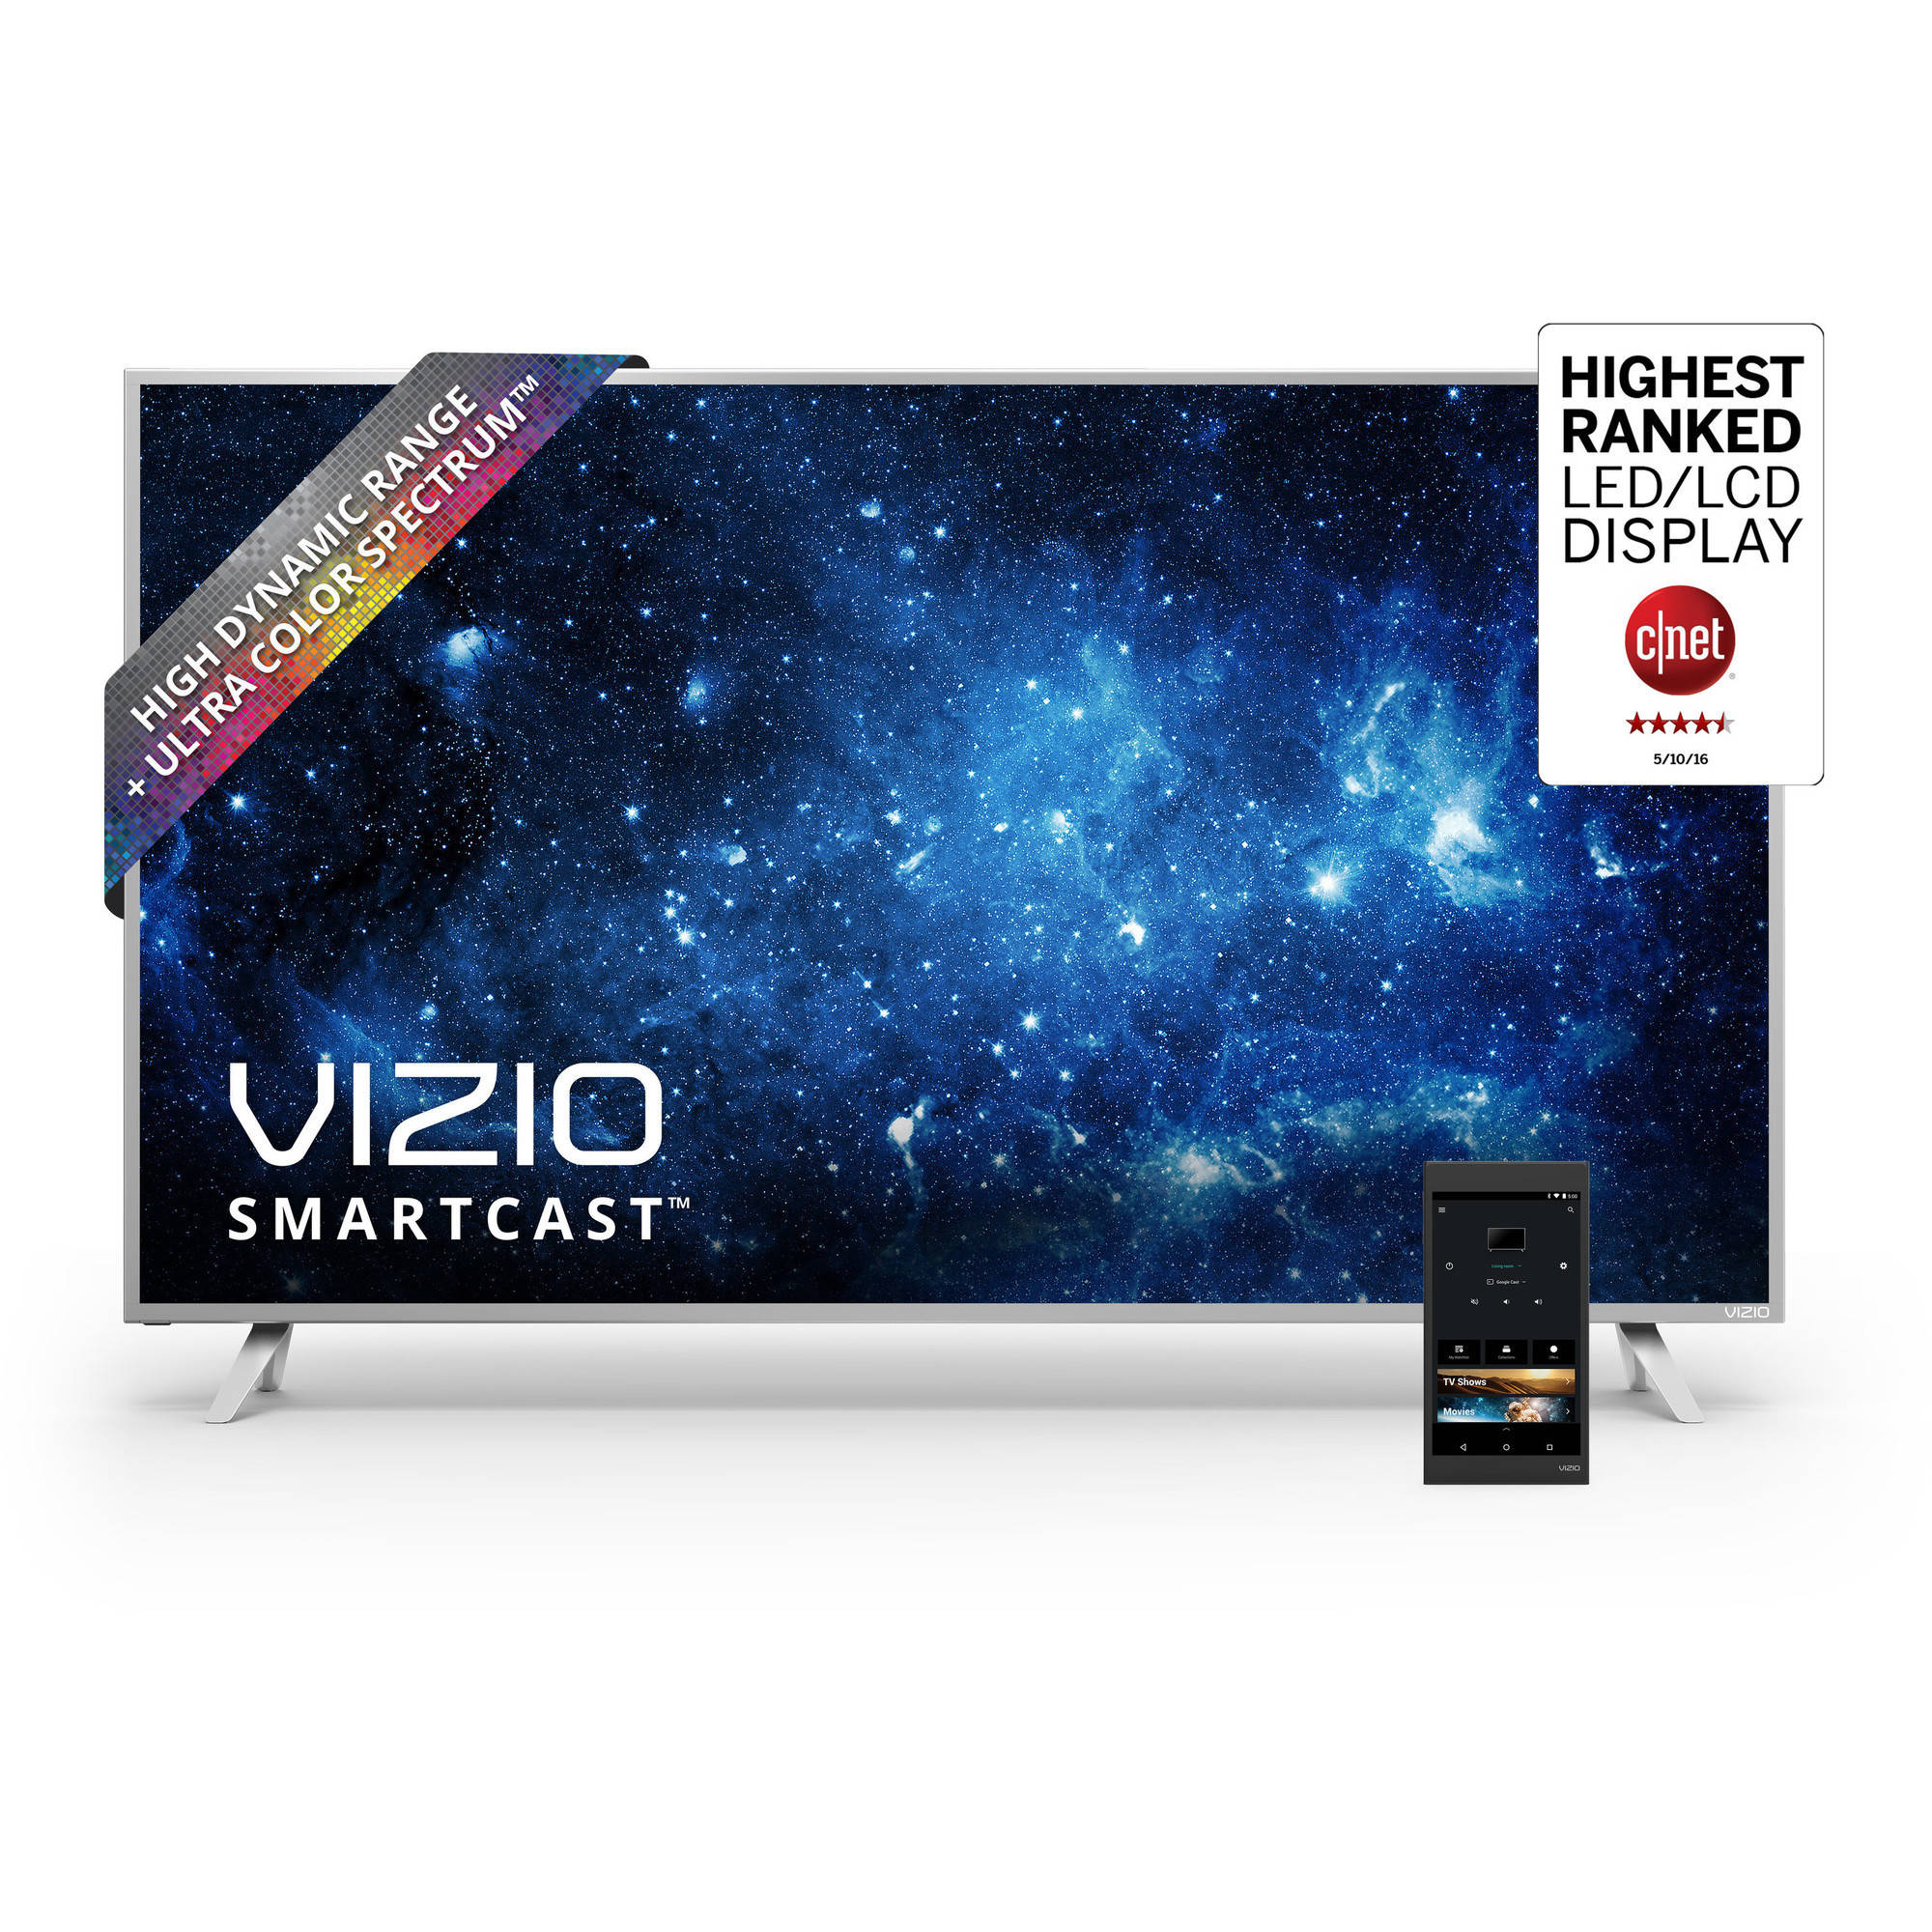 VIZIO 50" Class 4K (2160p) Smart LED Home Theater Display (P50-C1) - image 3 of 13